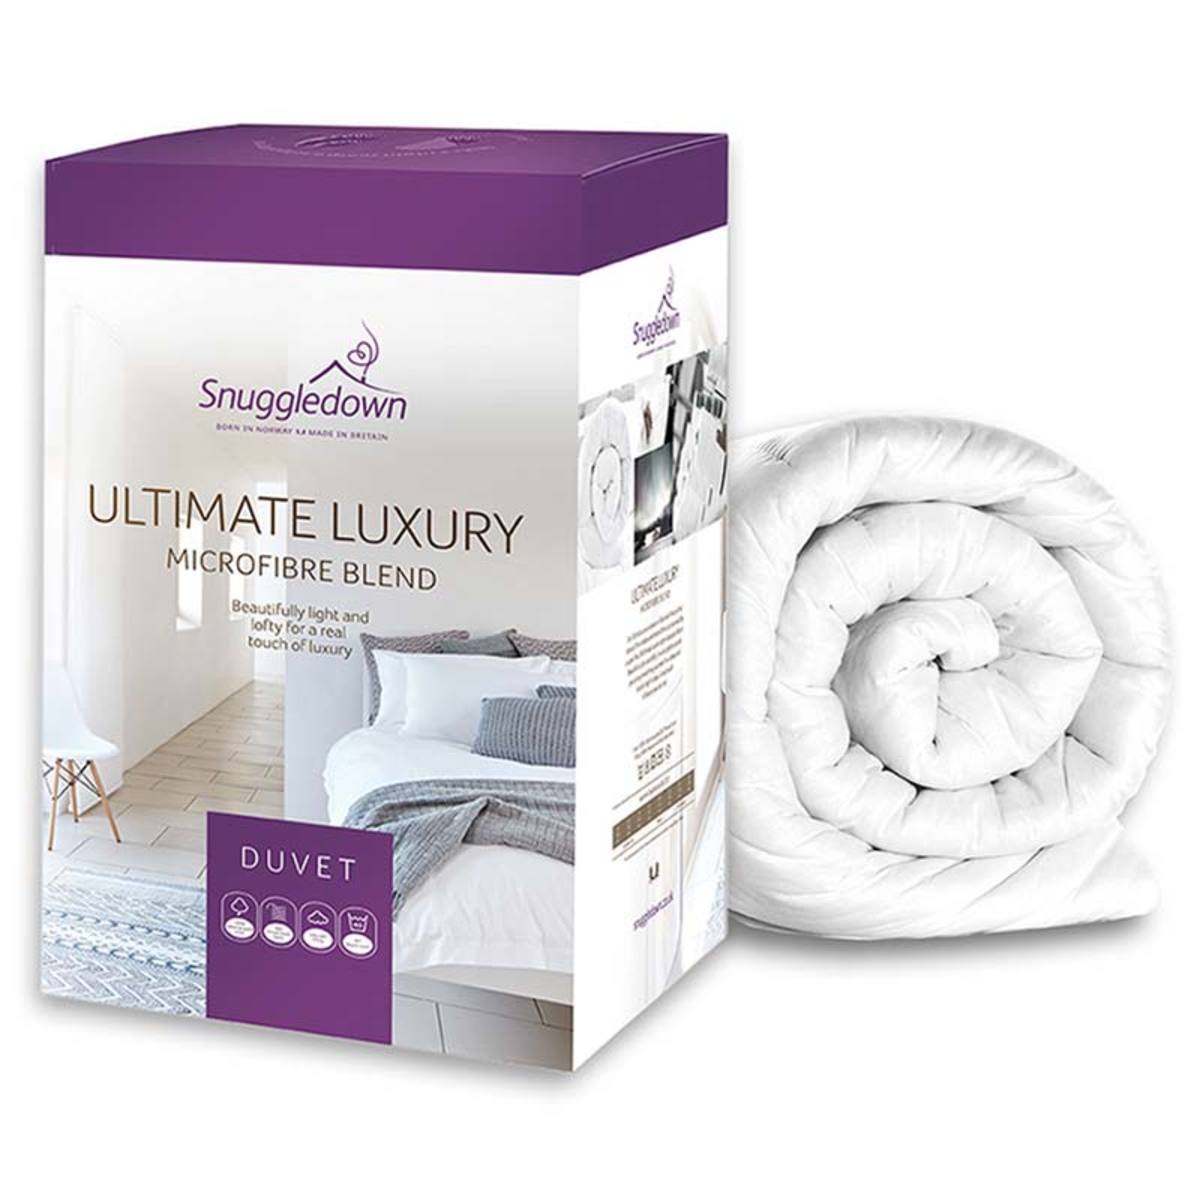 Snuggledown Ultimate Luxury Microfibre 10.5 Tog Duvet, Double